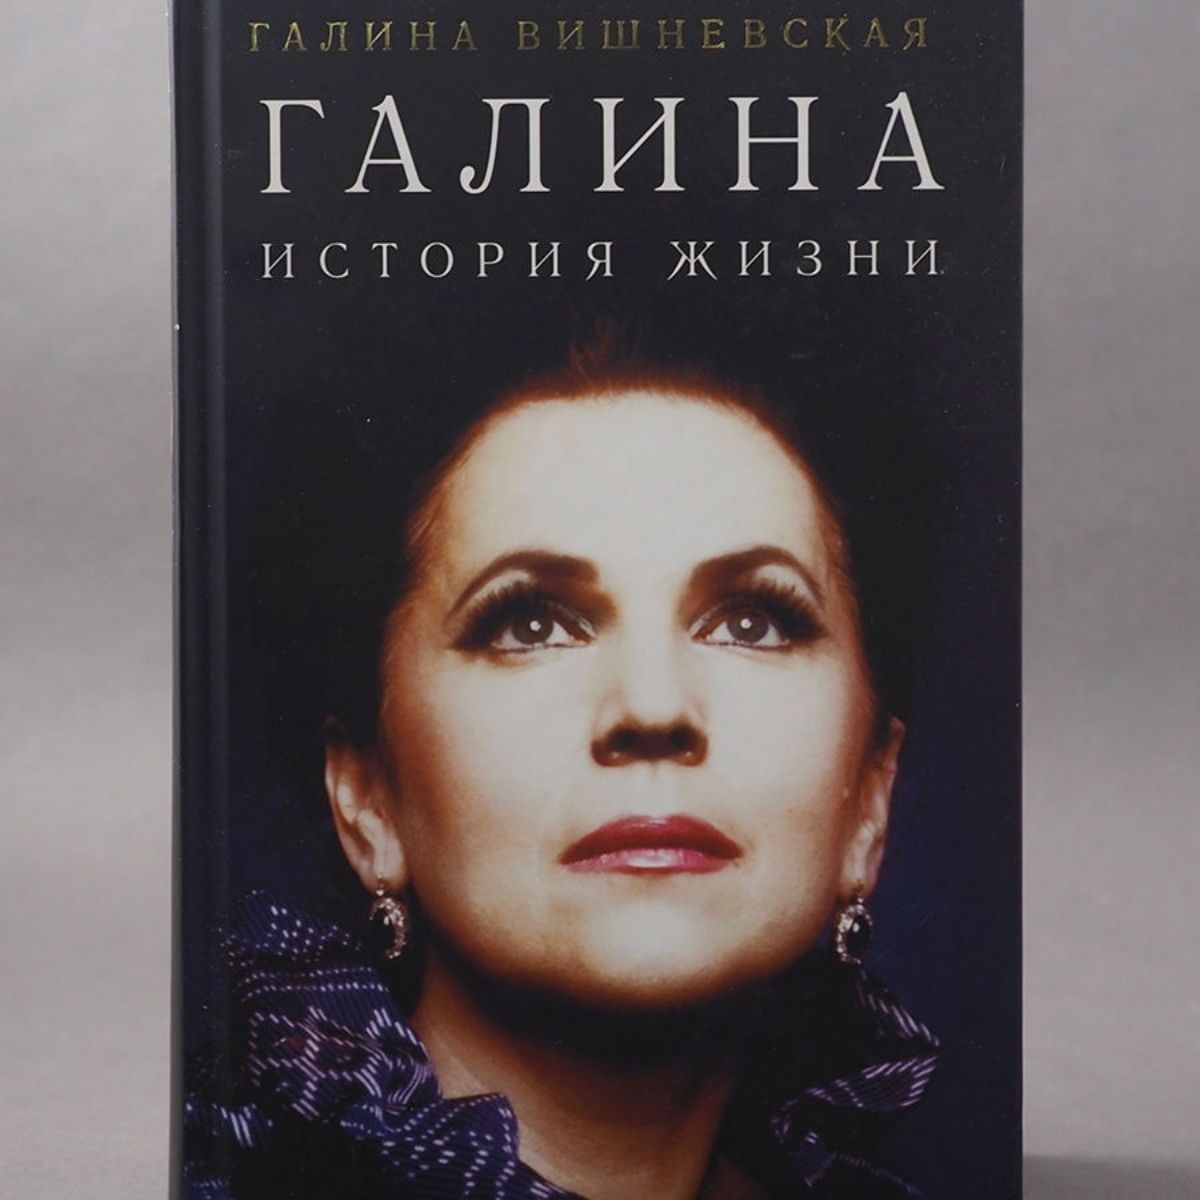 Galina Pavlovna Vishnevskaya livro Galina: A história de uma vida